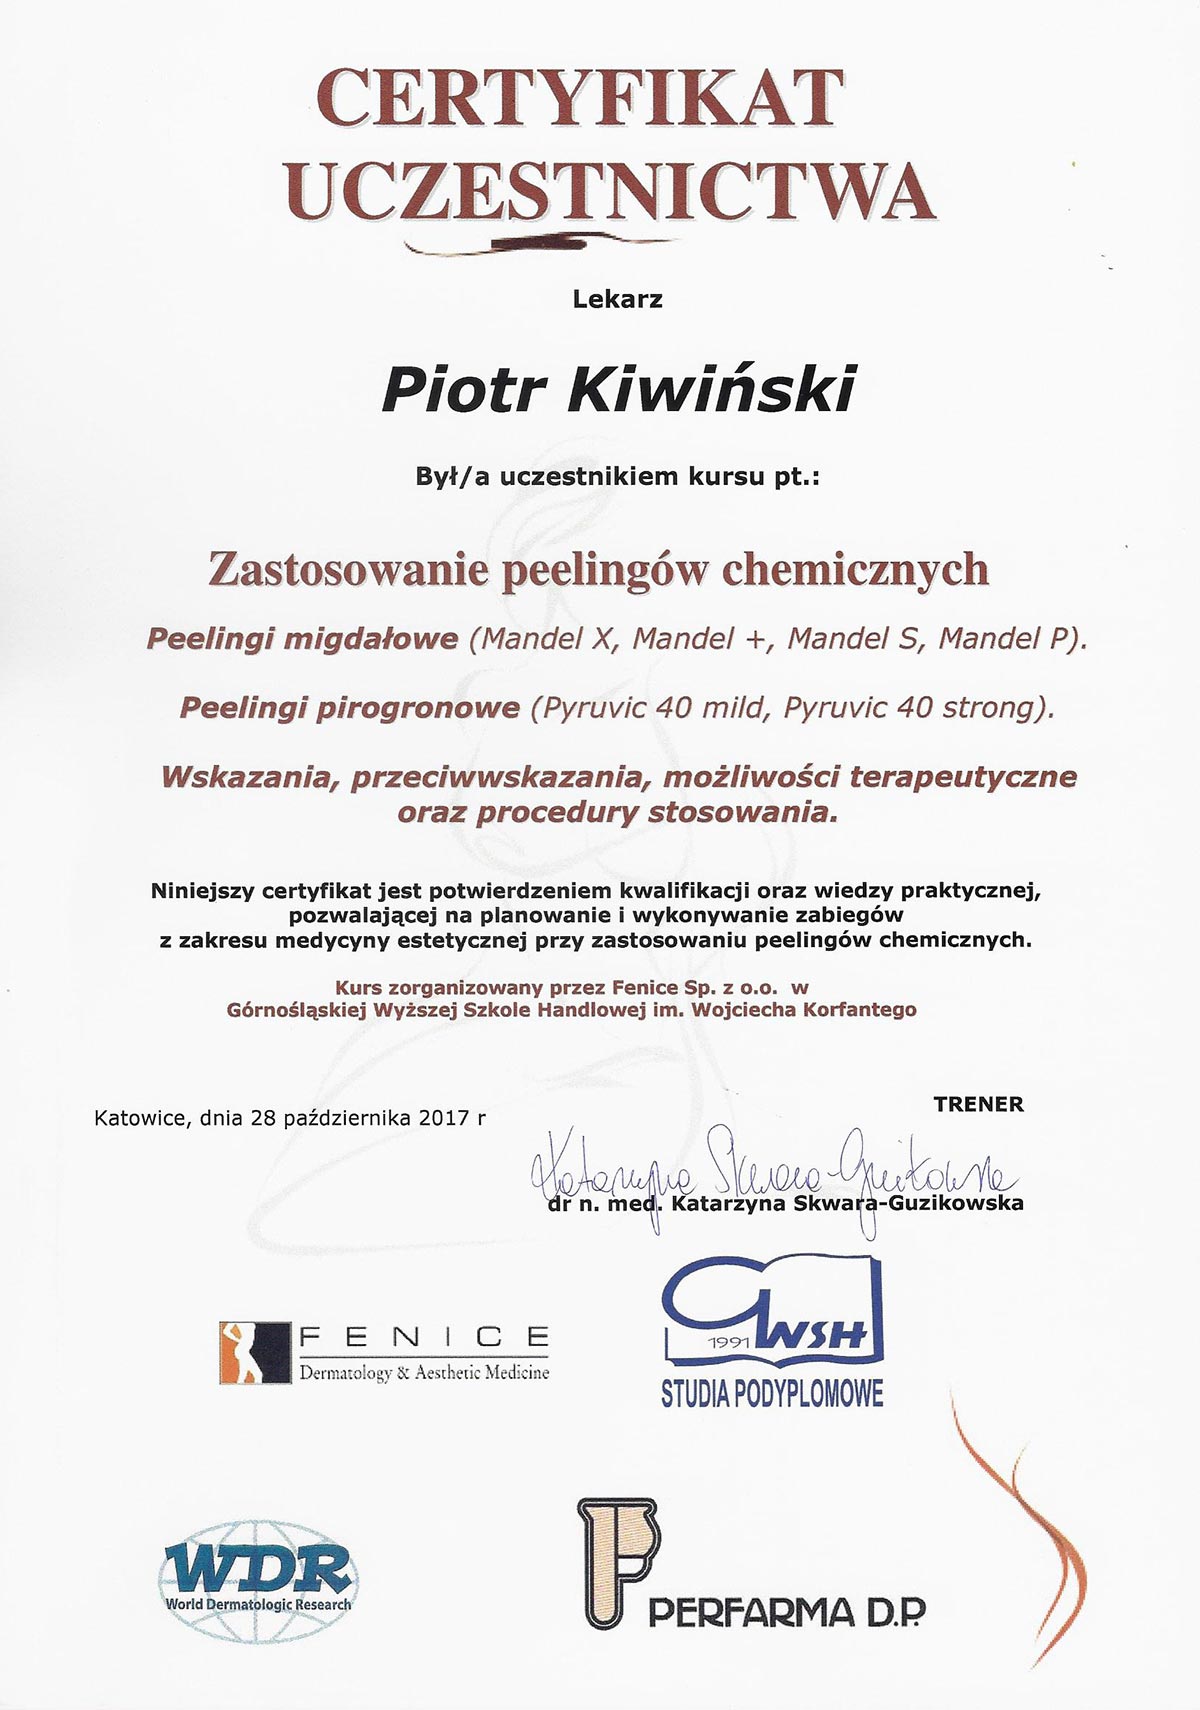 Novena Clinica - certyfikaty i dyplomy. Medycyna estetyczna, chirurgia ogólna i onkologiczna